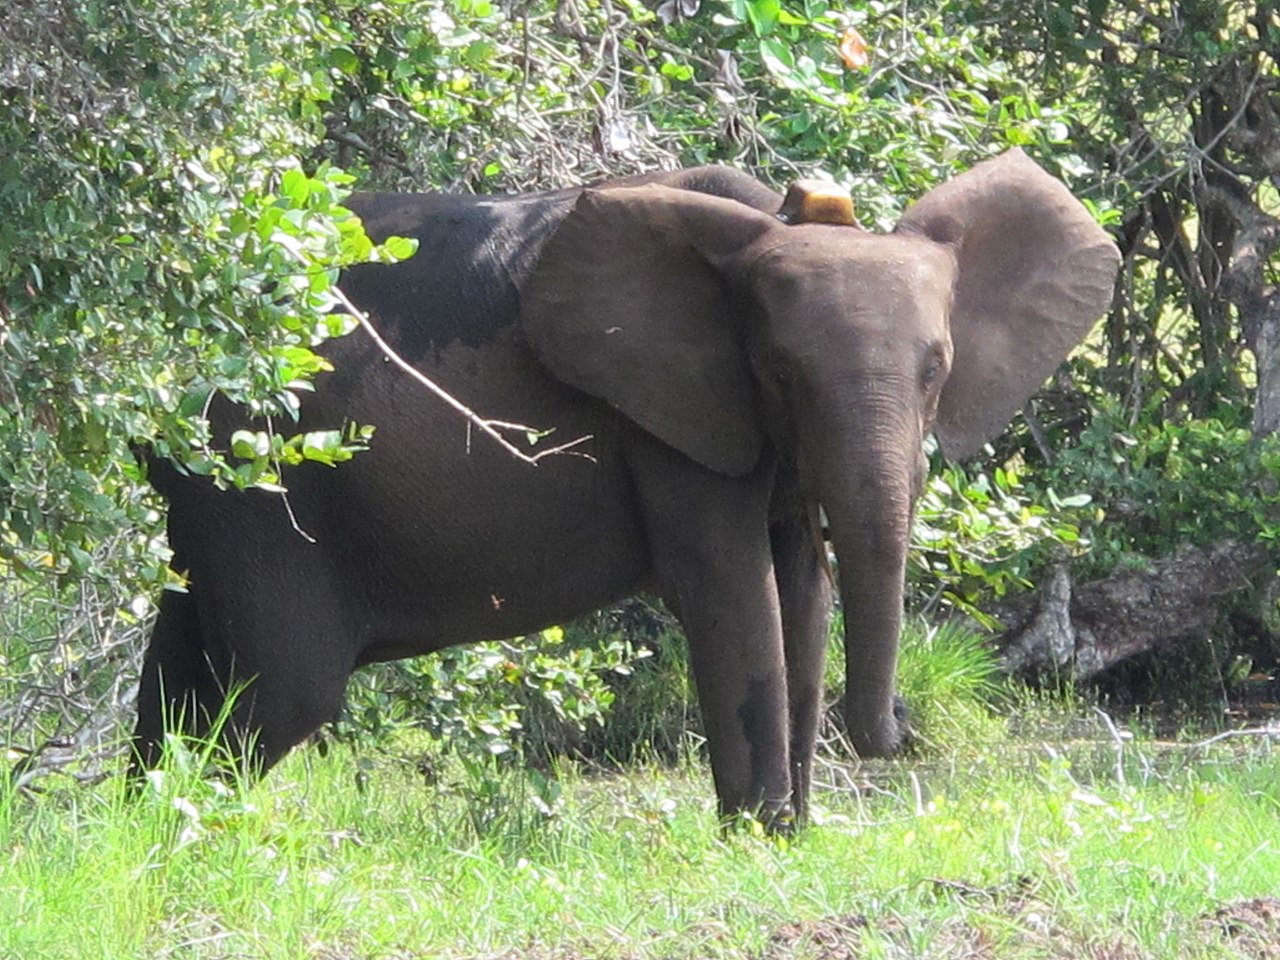 A Visit to “Africa’s Last Eden”- Gabon’s Loango National Park